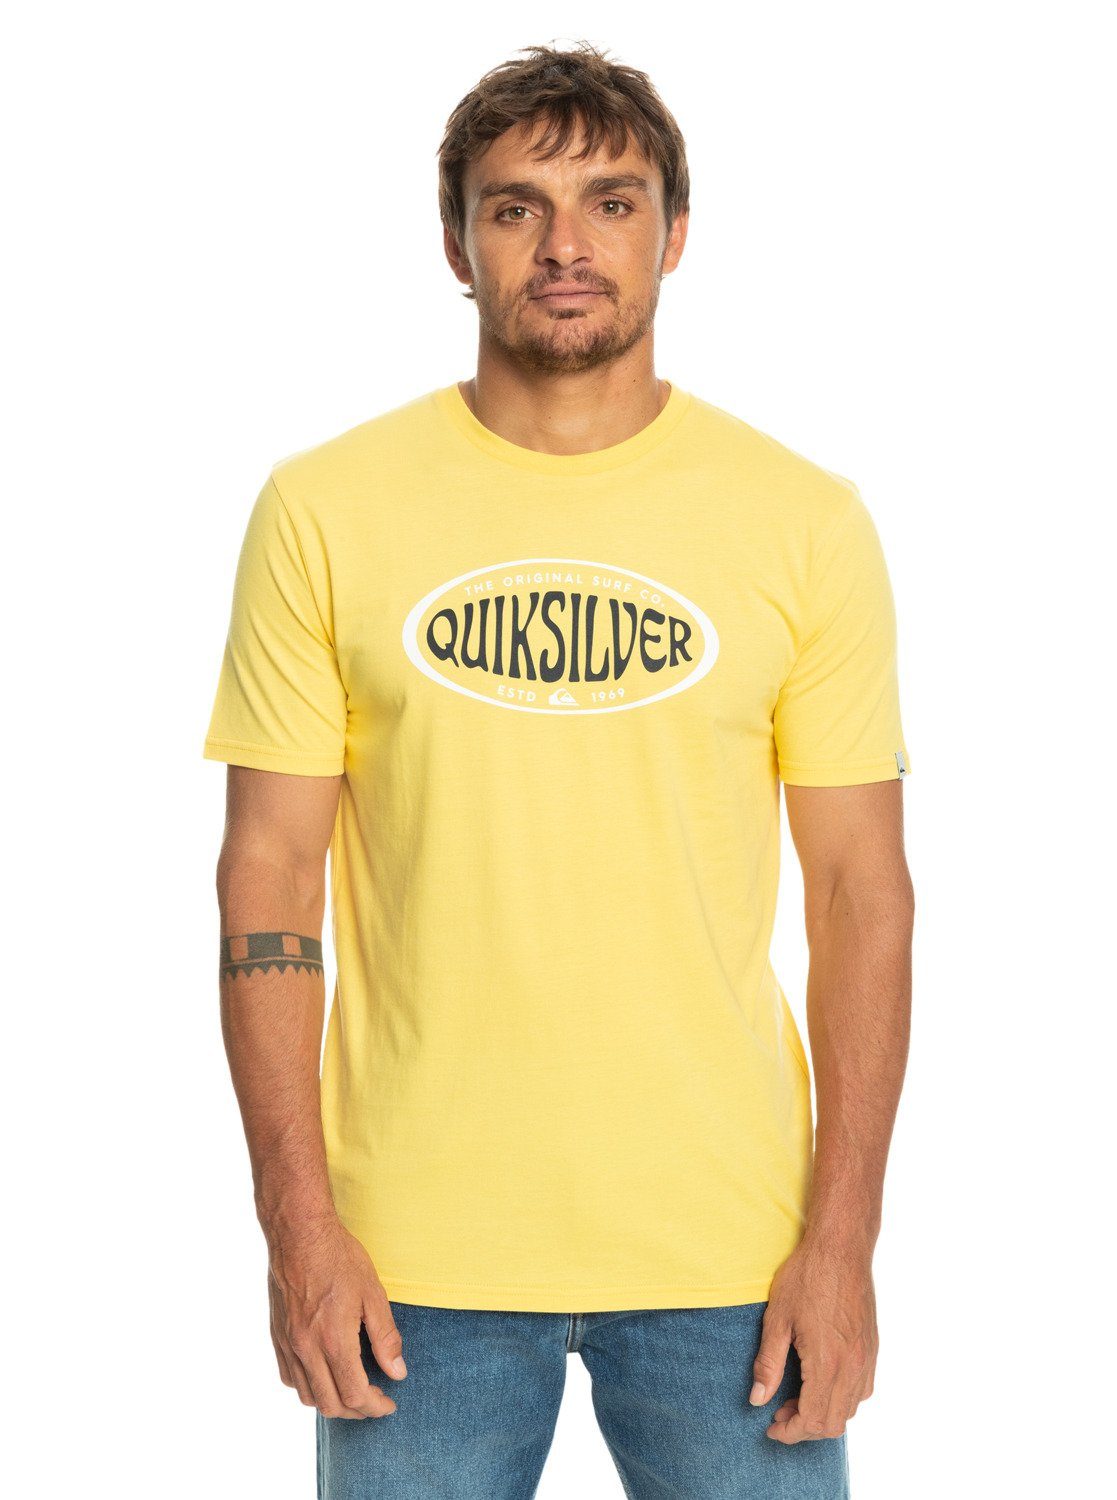 In Circles Quiksilver T-Shirt